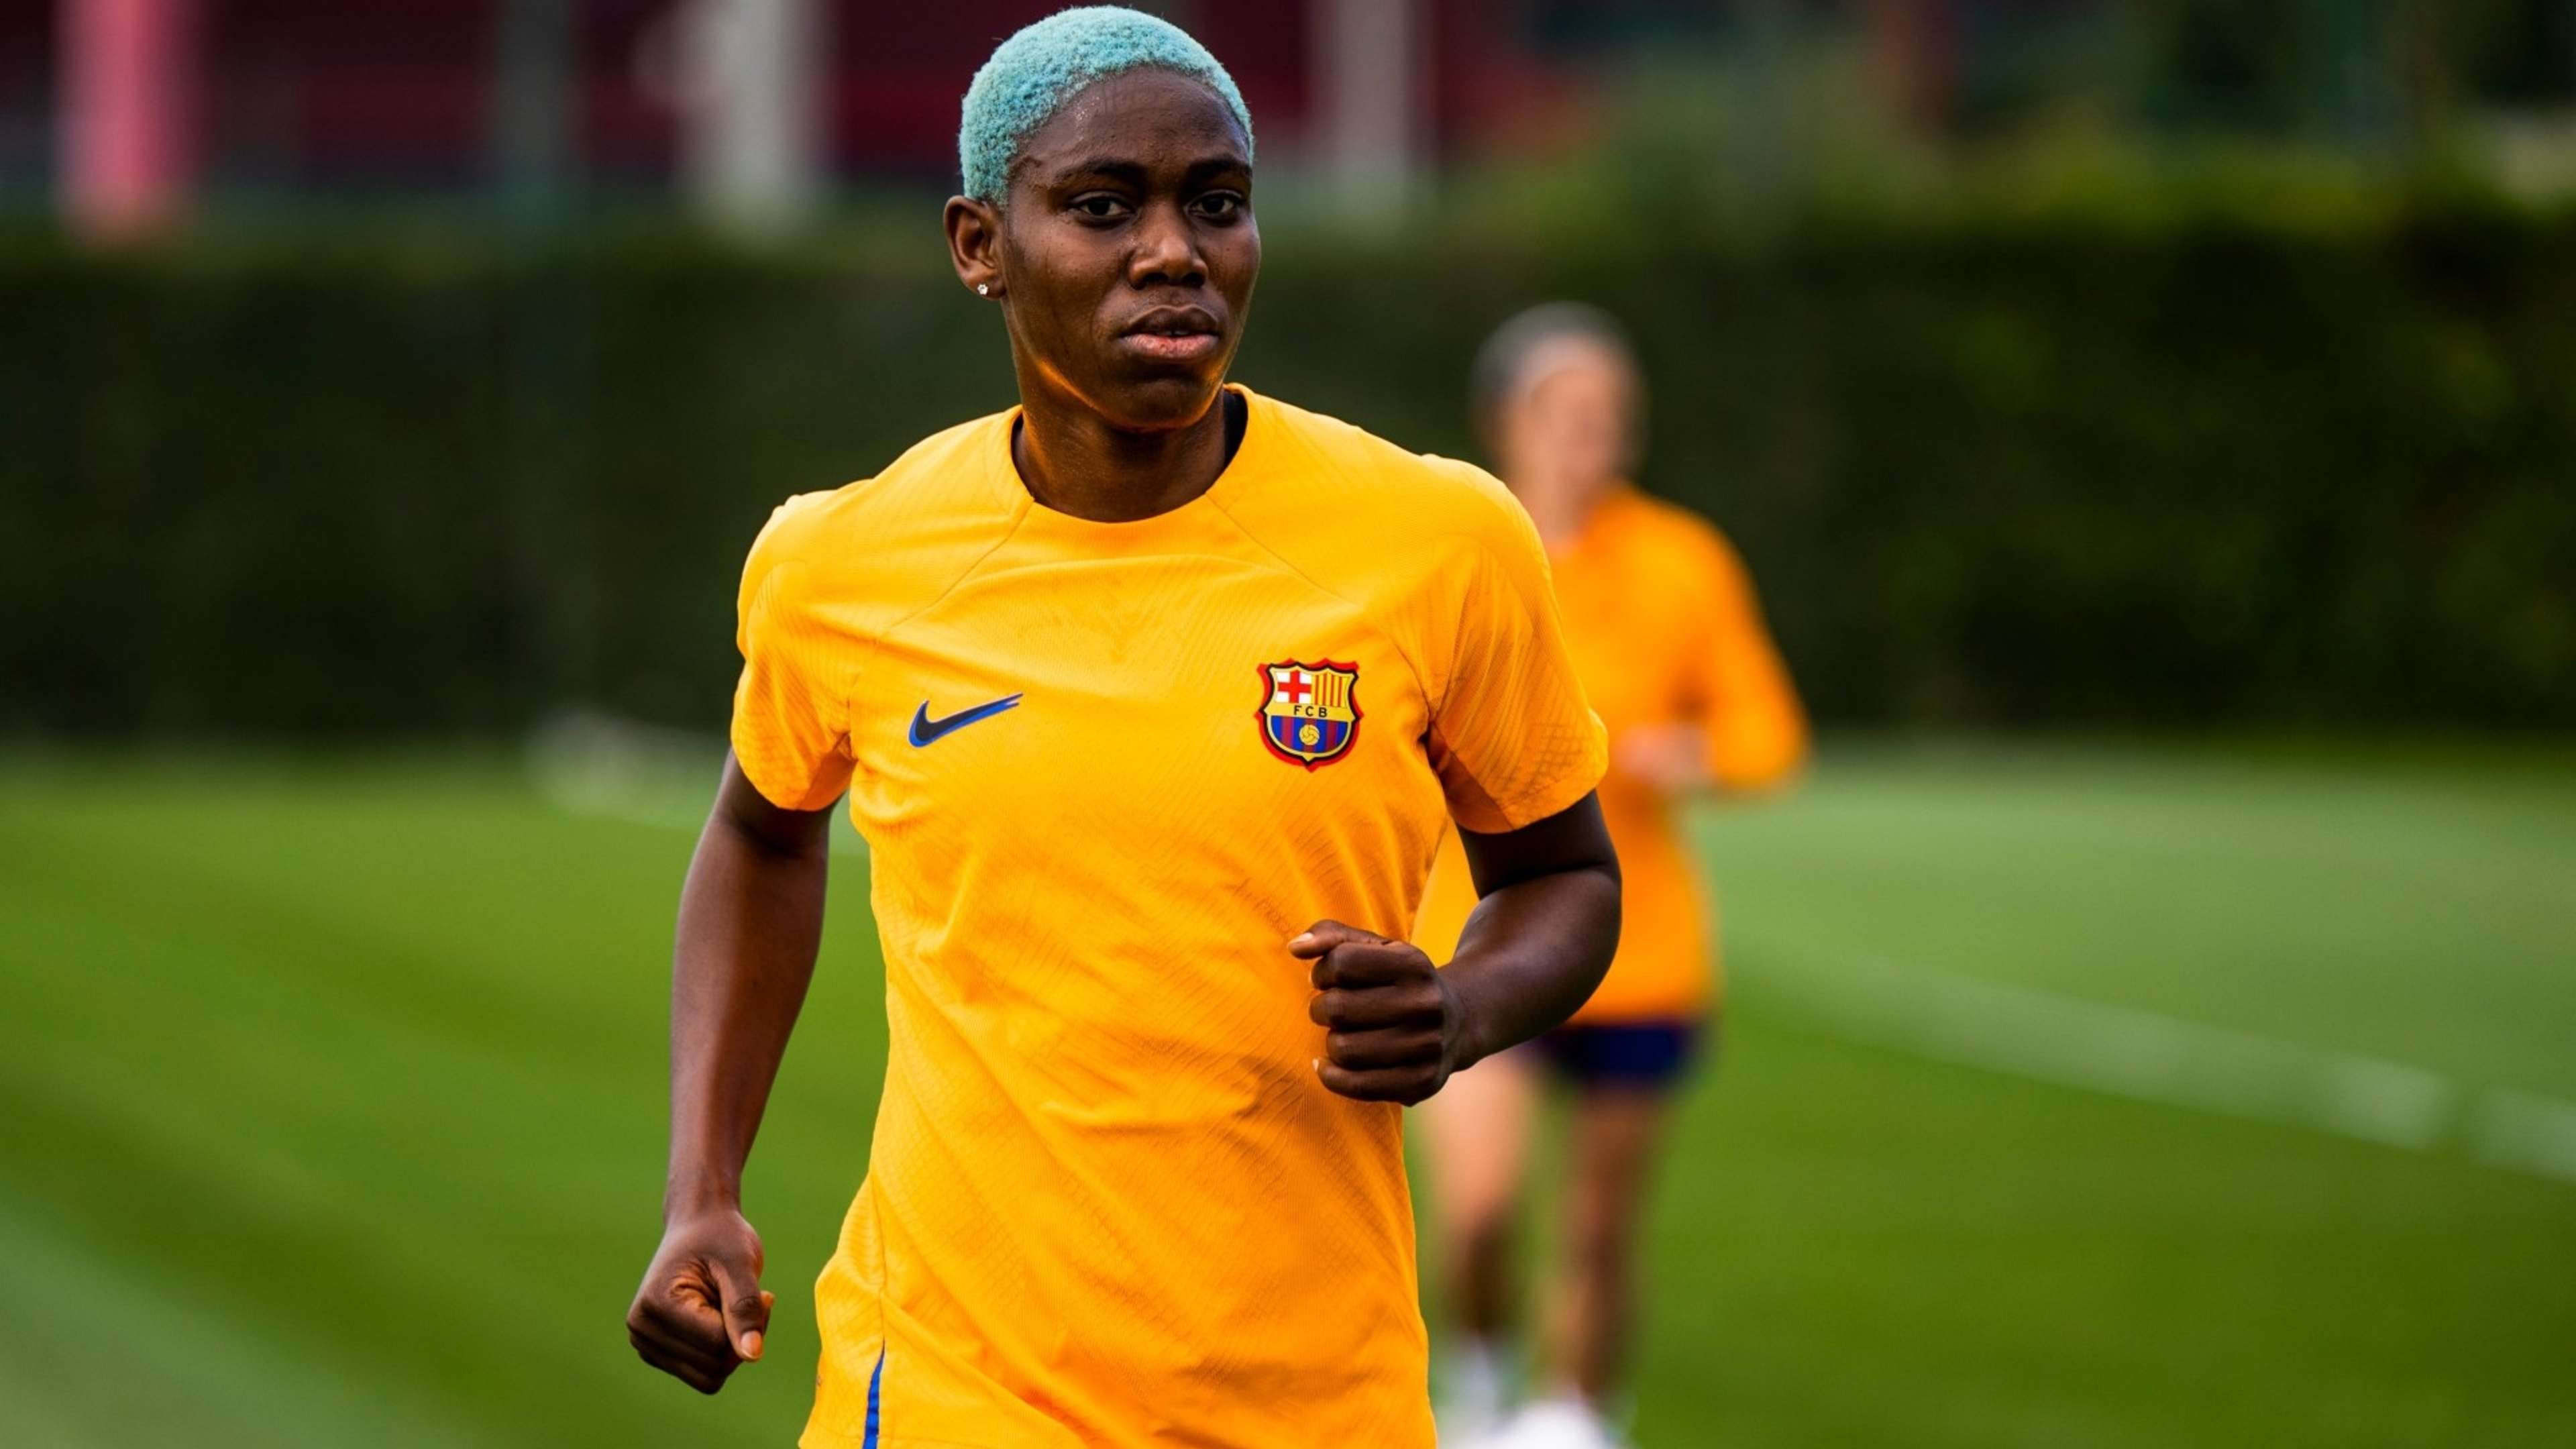 Barcelona Femeni striker Asisat Oshoala and Nigeria